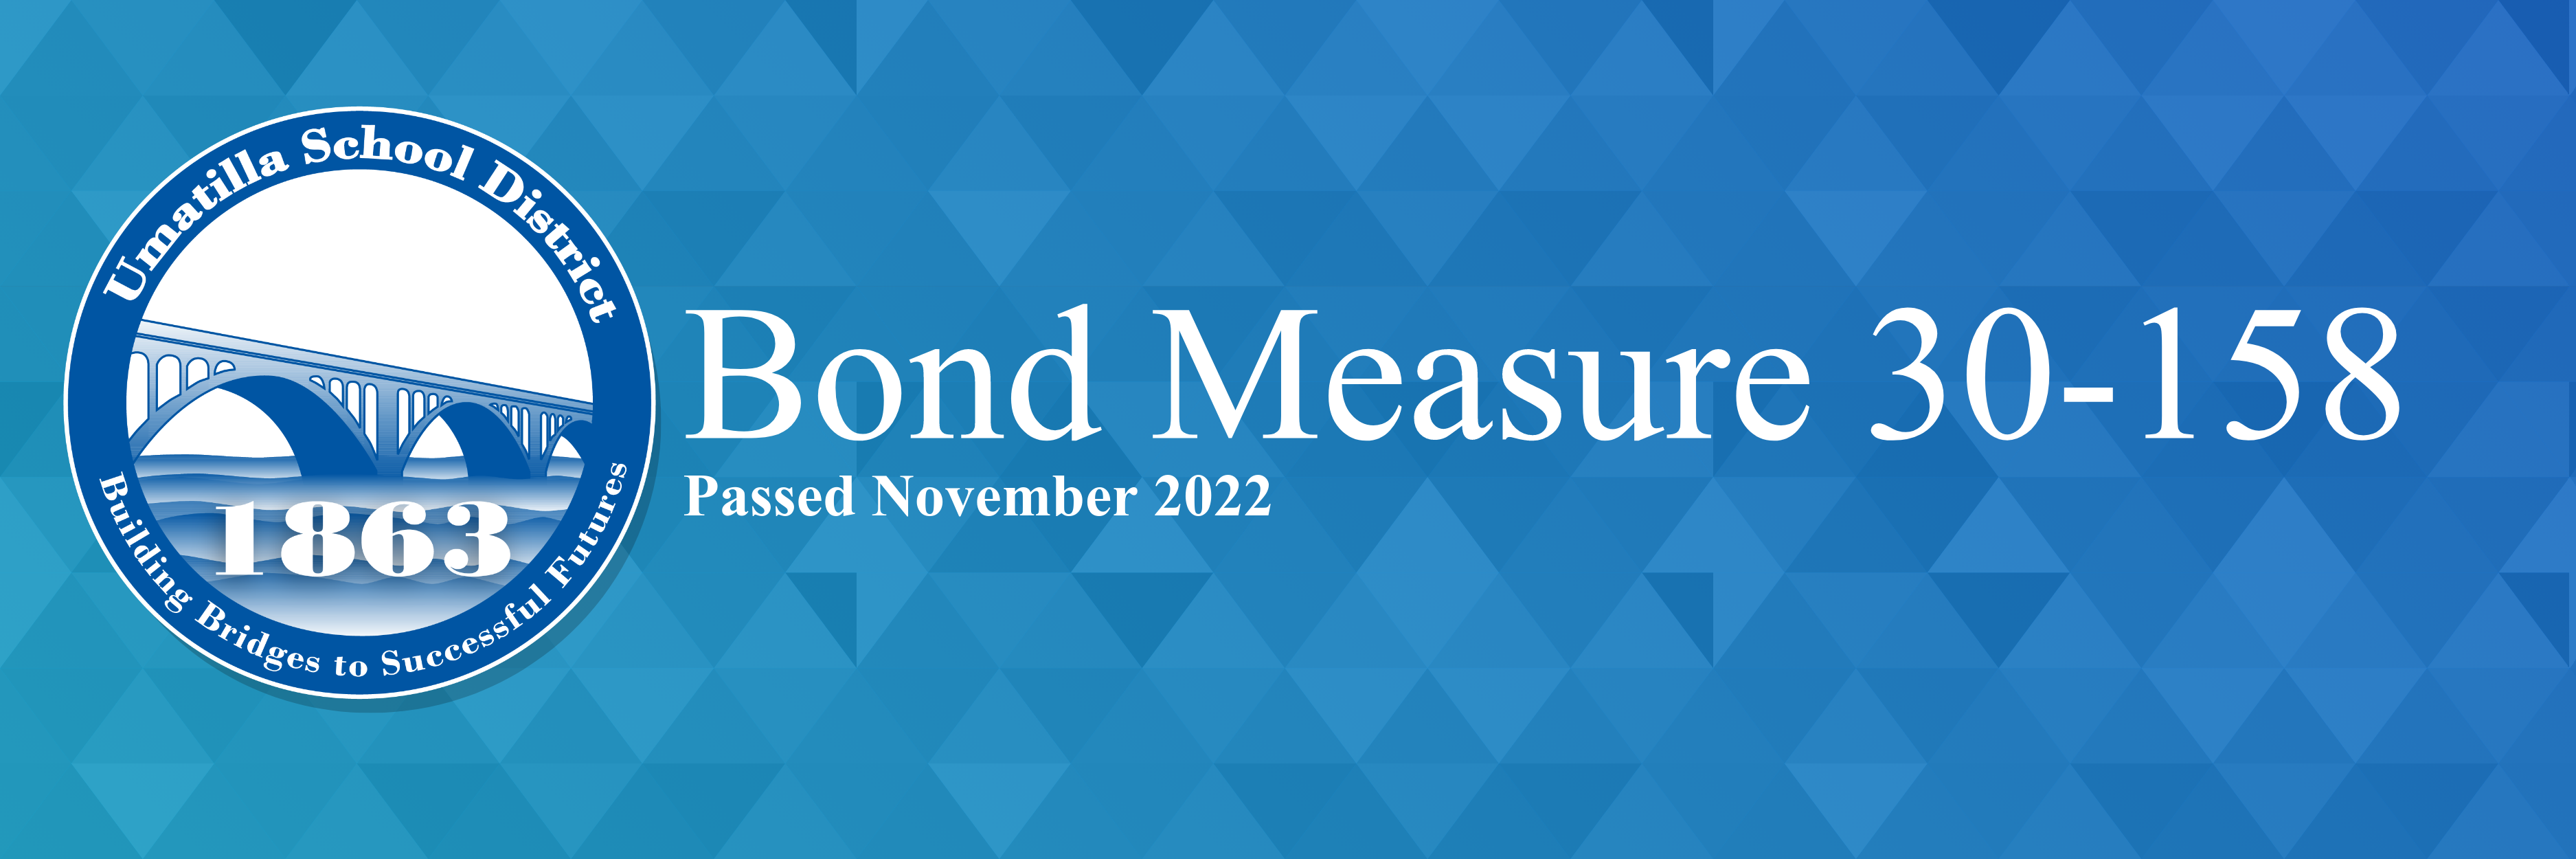 Bond Measure 30-158 Passed November 2022